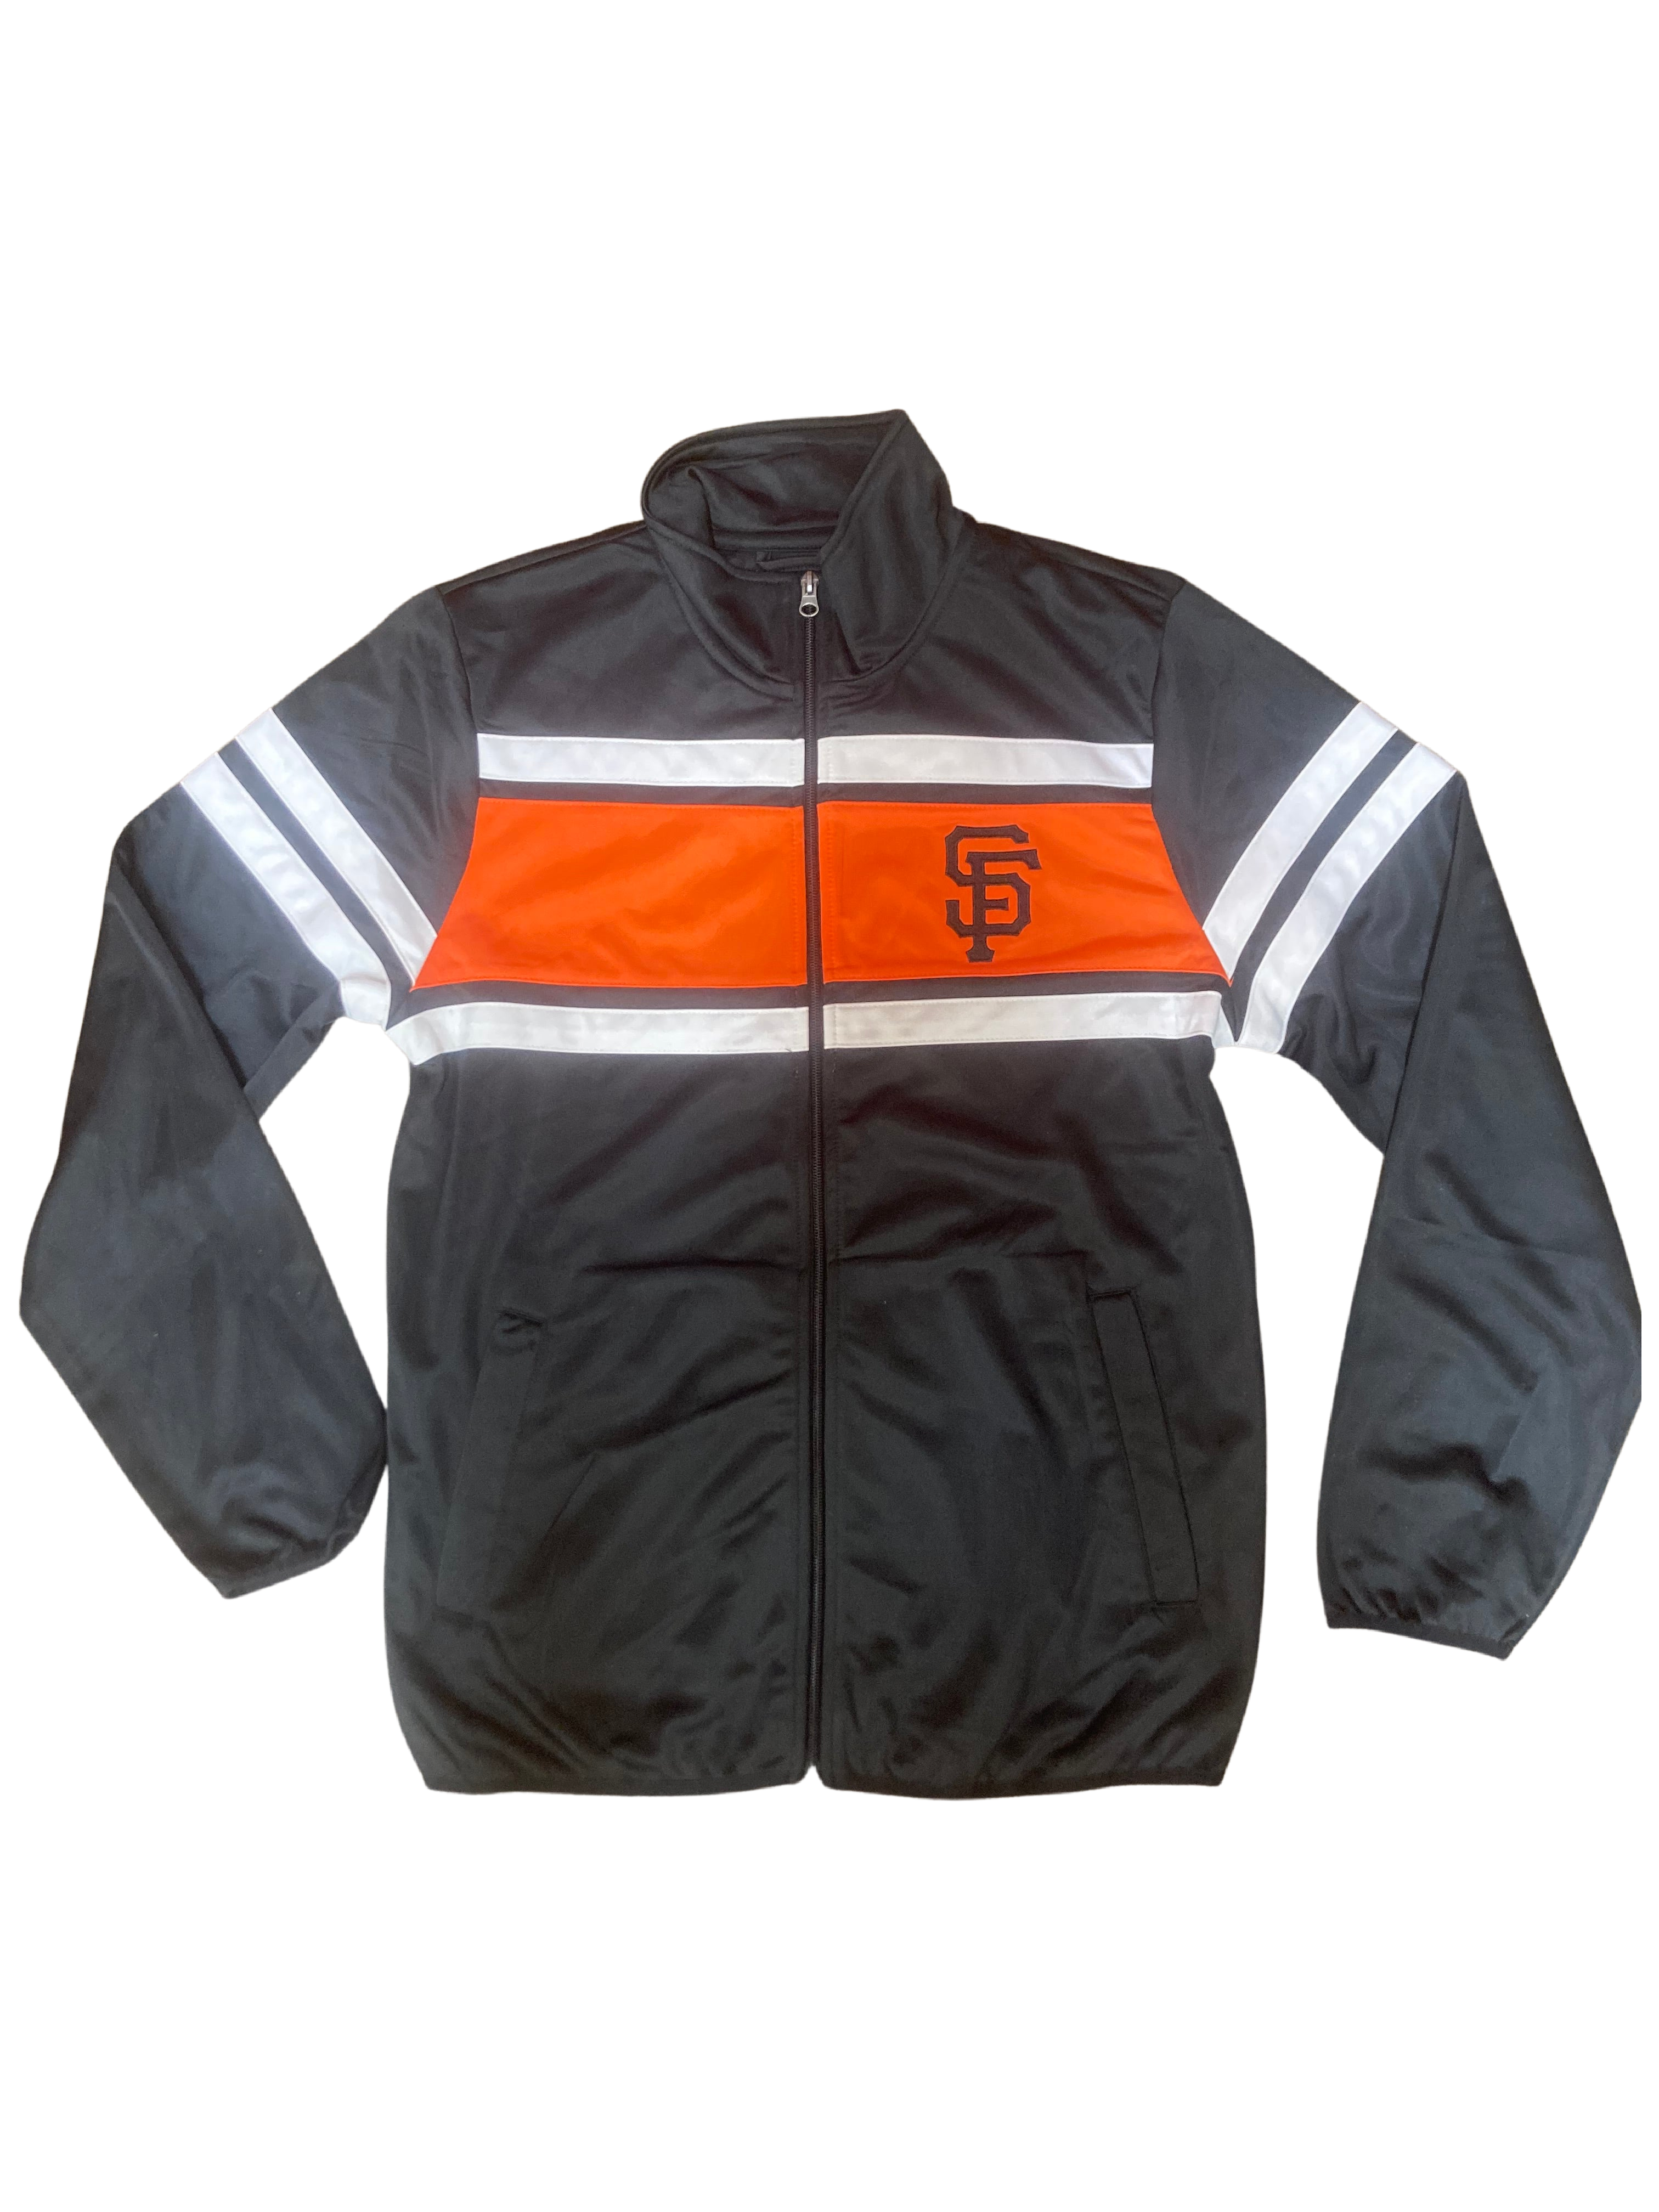 San Francisco Giants G-III Full-Zip Track Jacket - Black/Orange/White